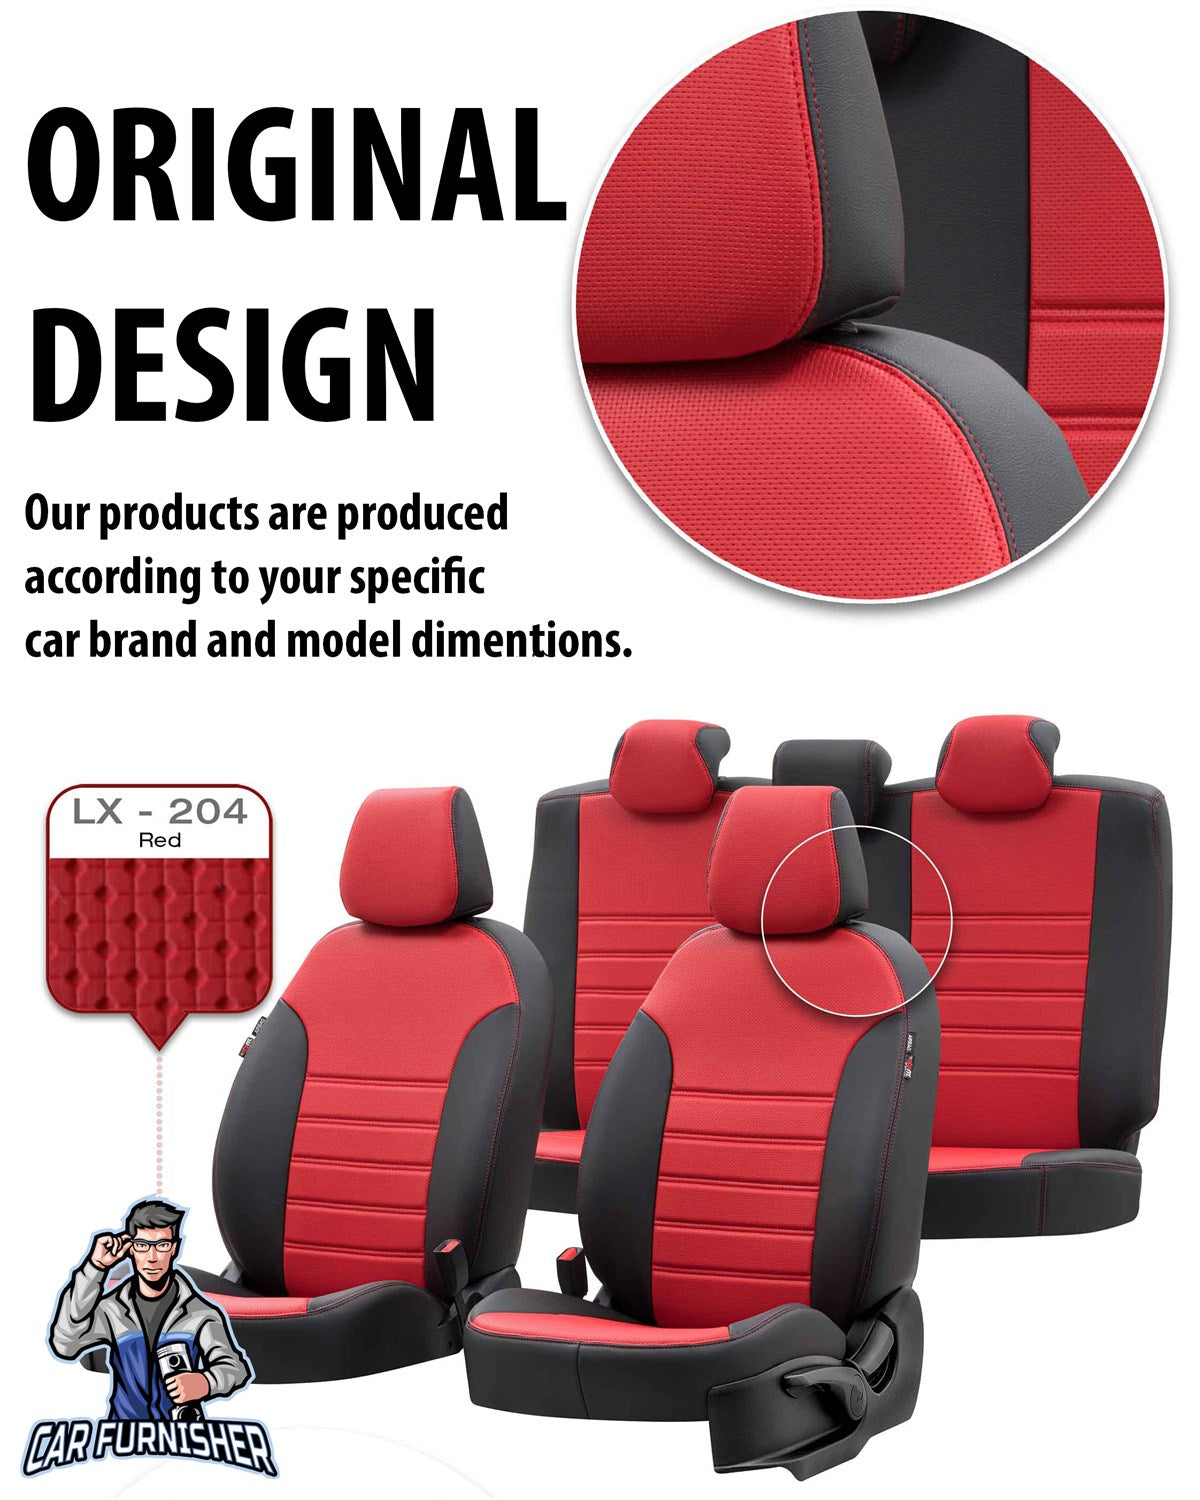 Skoda Kodiaq Seat Covers New York Leather Design Smoked Black Leather